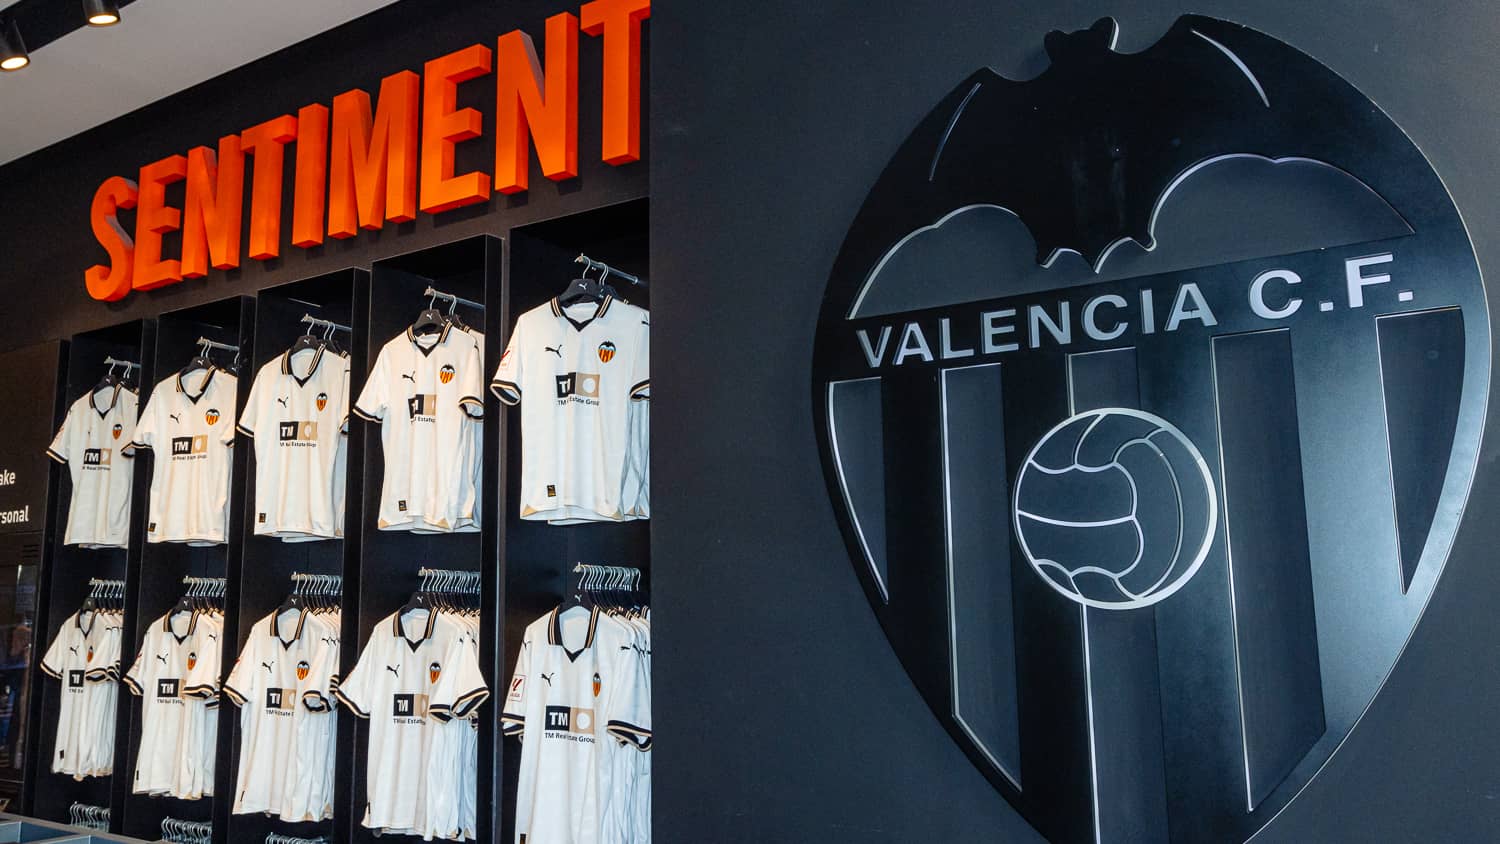 The Valencia CF Megastore to display the Copa Davis trophy ...